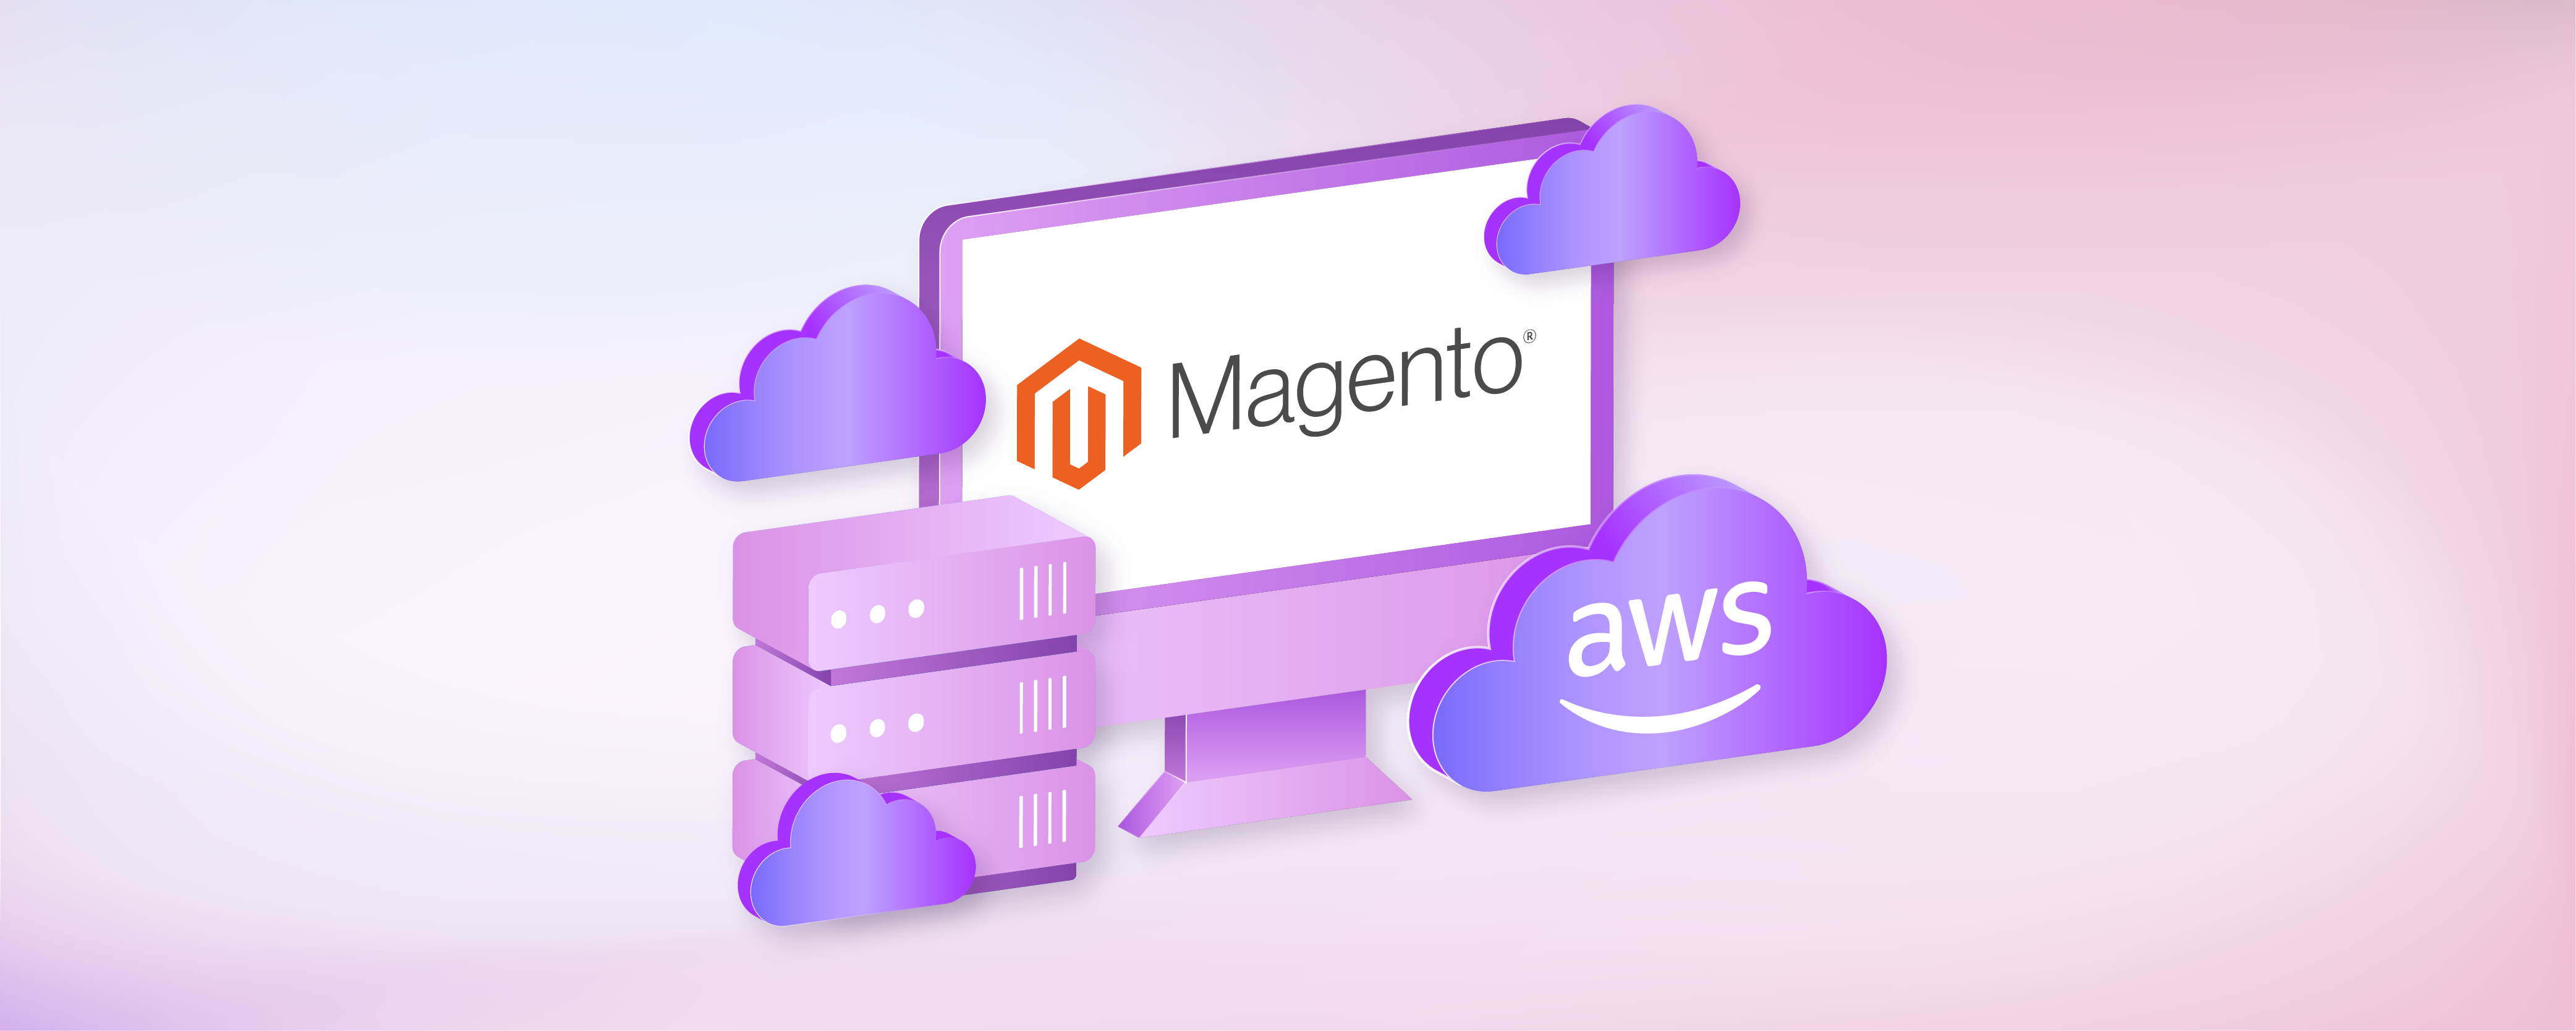 Hosting Magento on Amazon Web Services